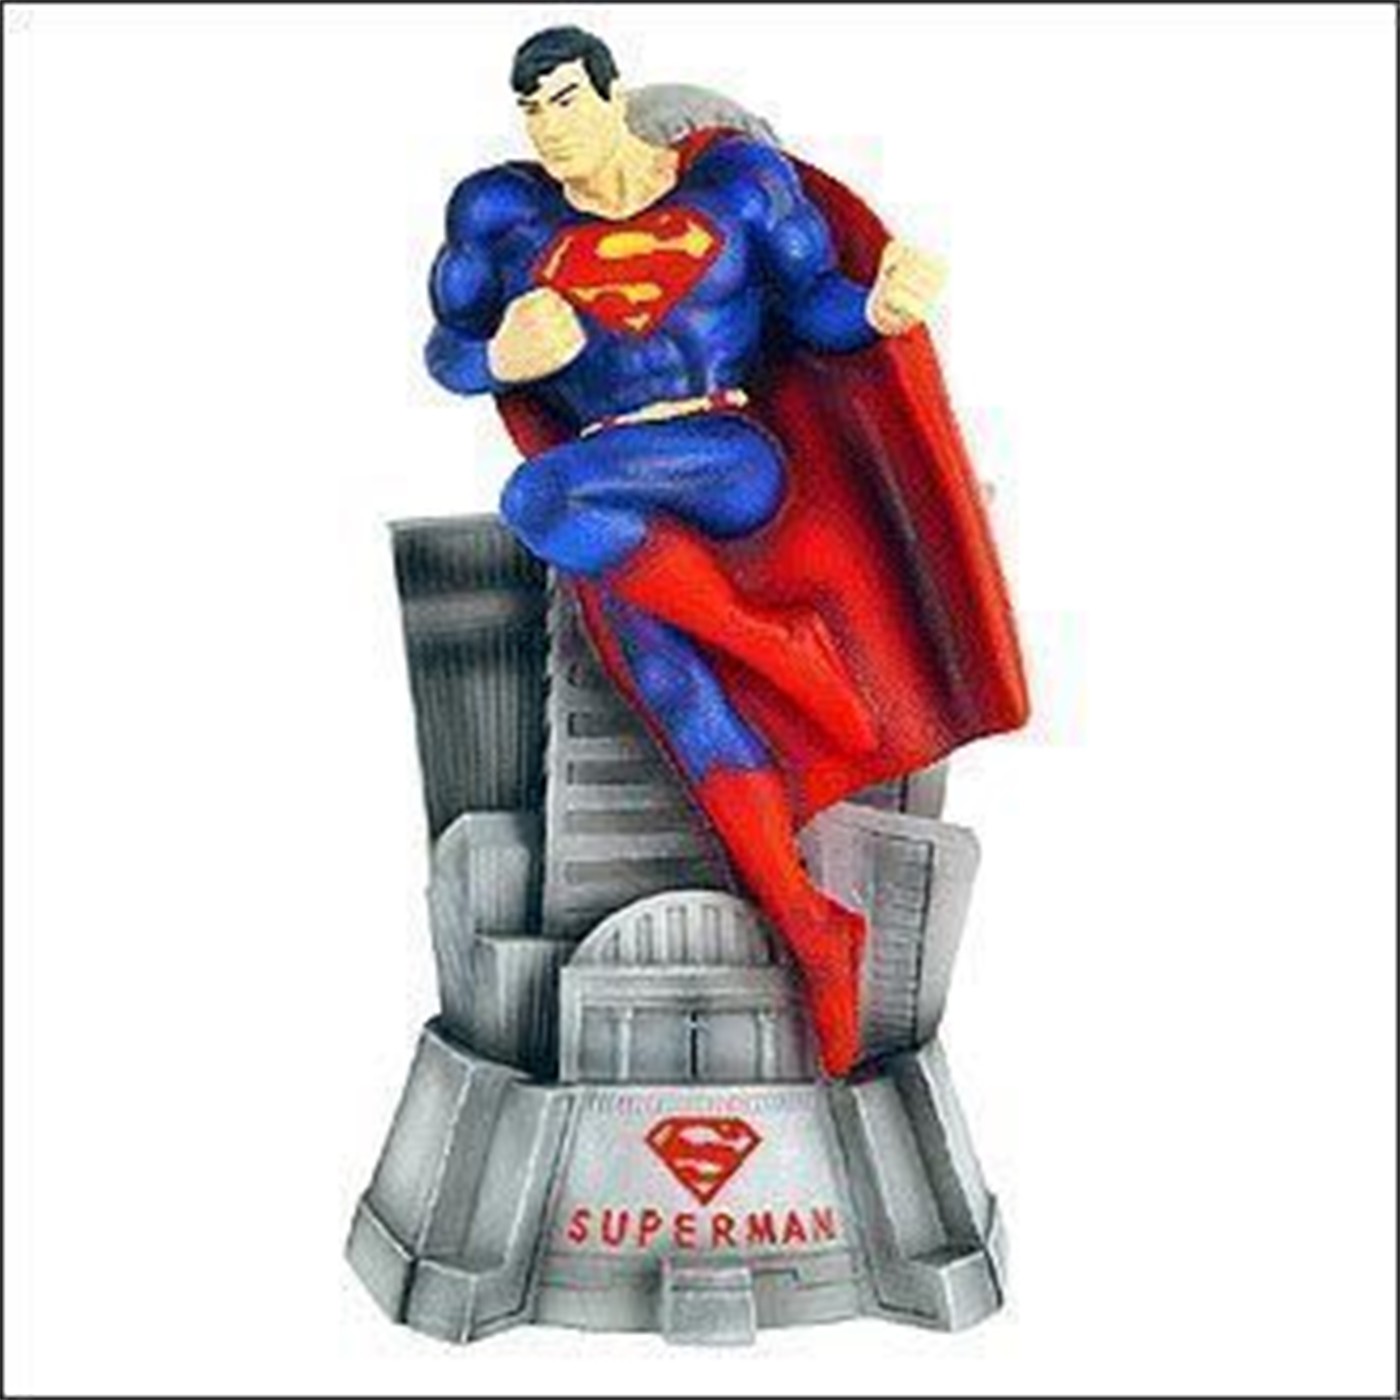 Superman Image Bank